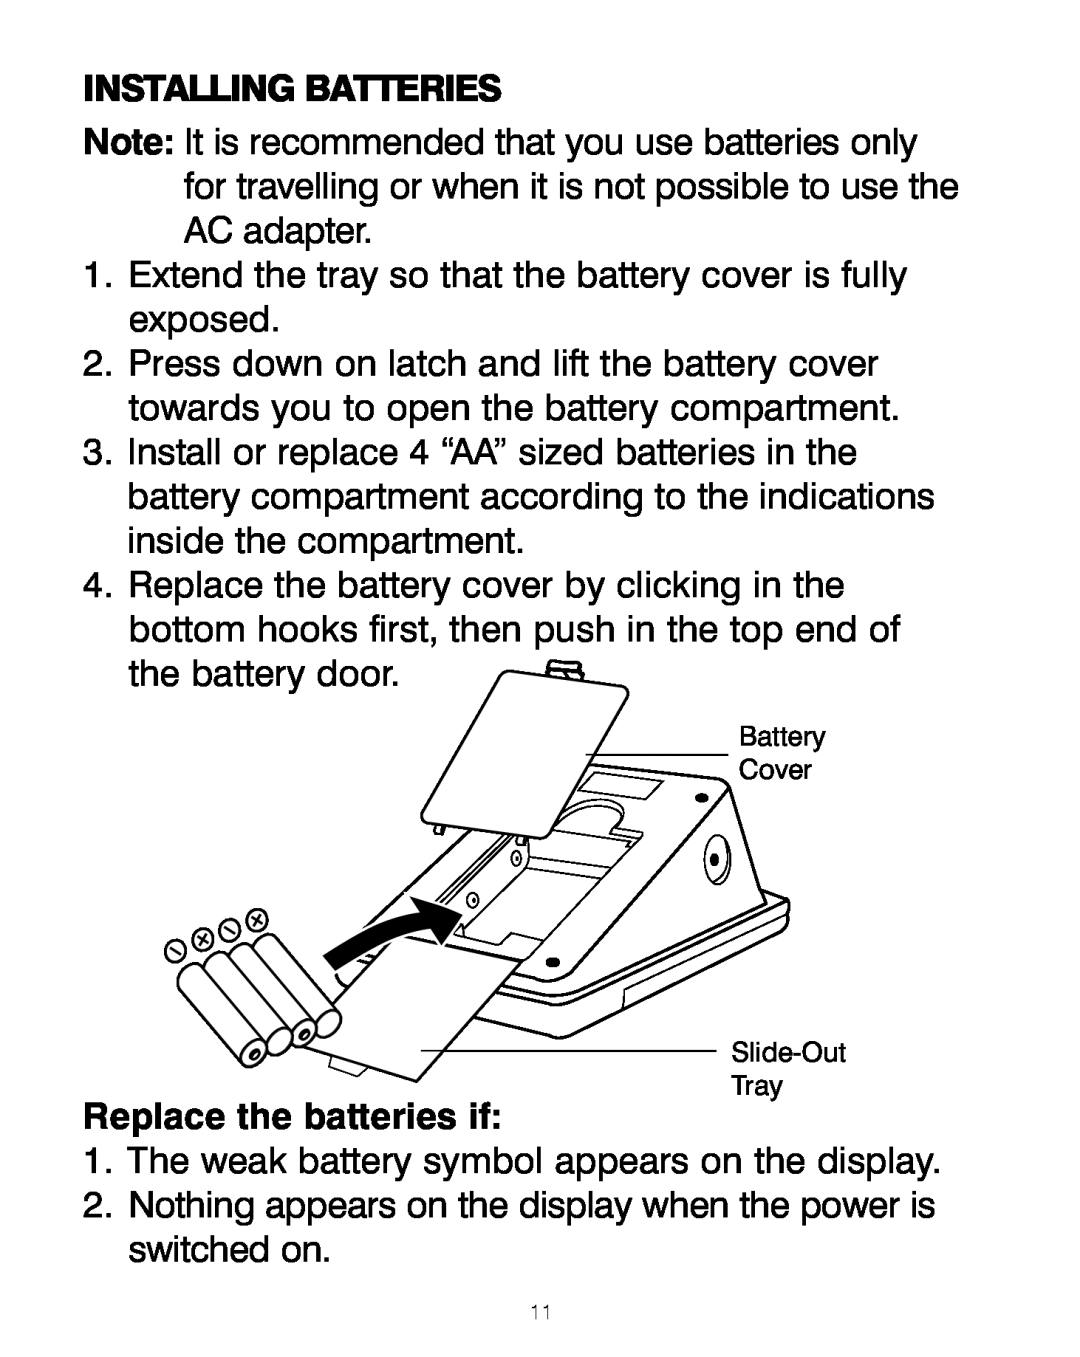 HoMedics BPA-200 manual Installing Batteries, Replace the batteries if 